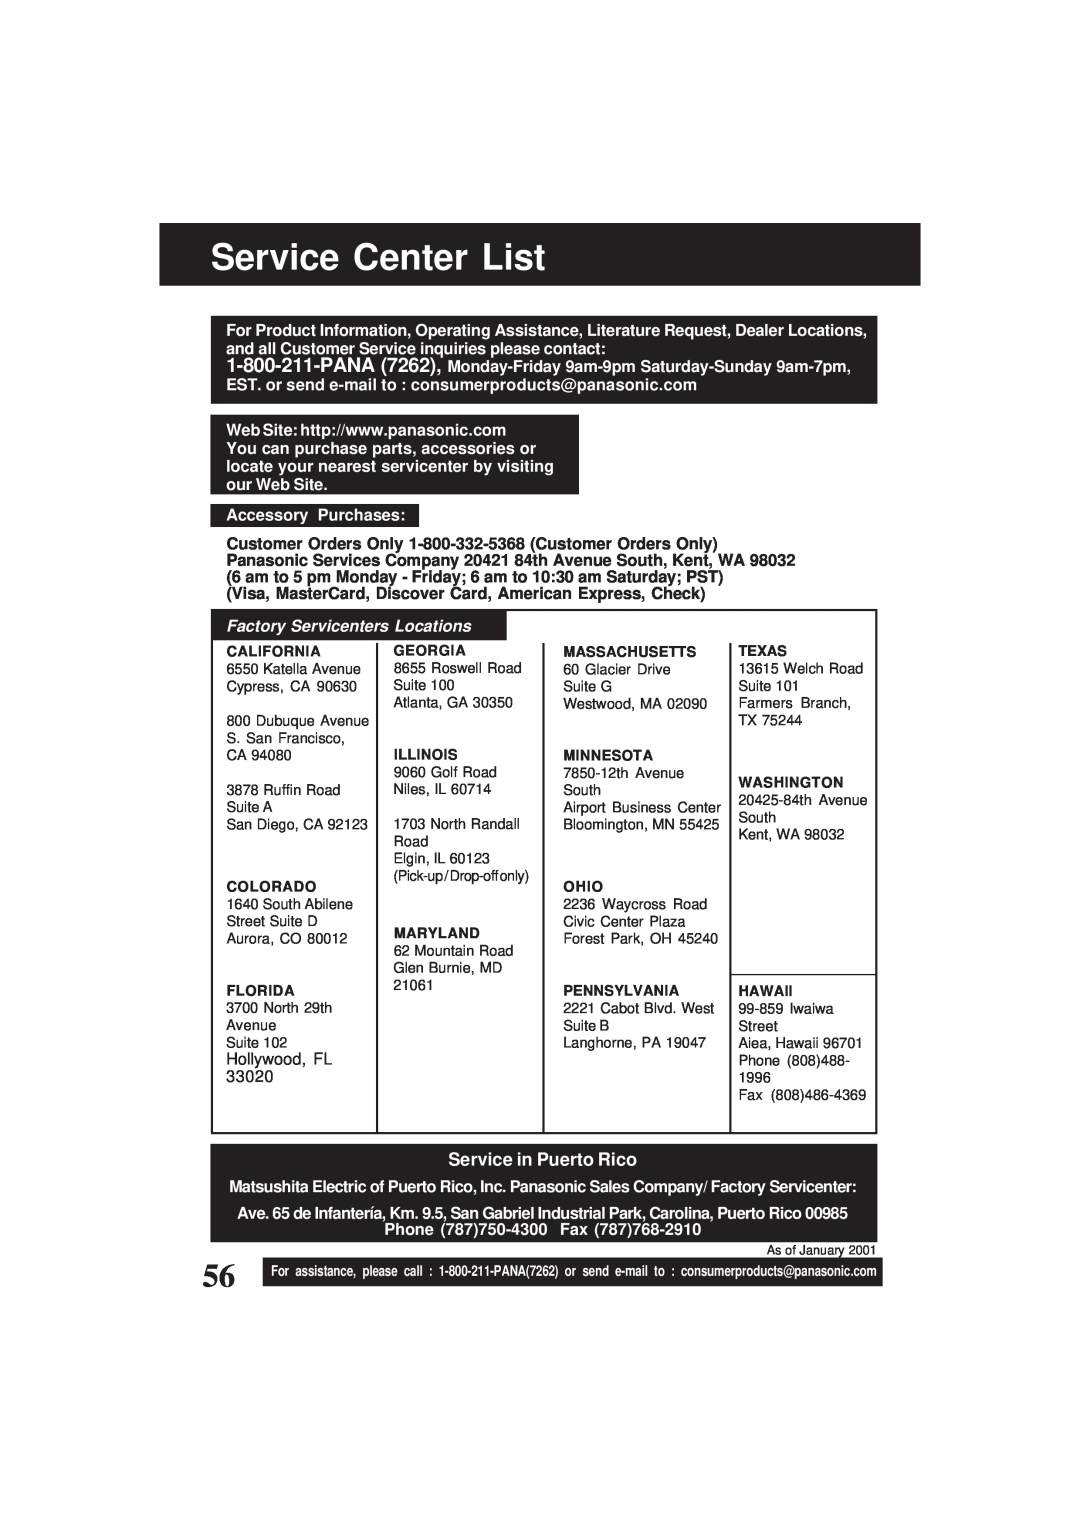 Panasonic PV-D4761 Service Center List, Service in Puerto Rico, Visa, MasterCard, Discover Card, American Express, Check 